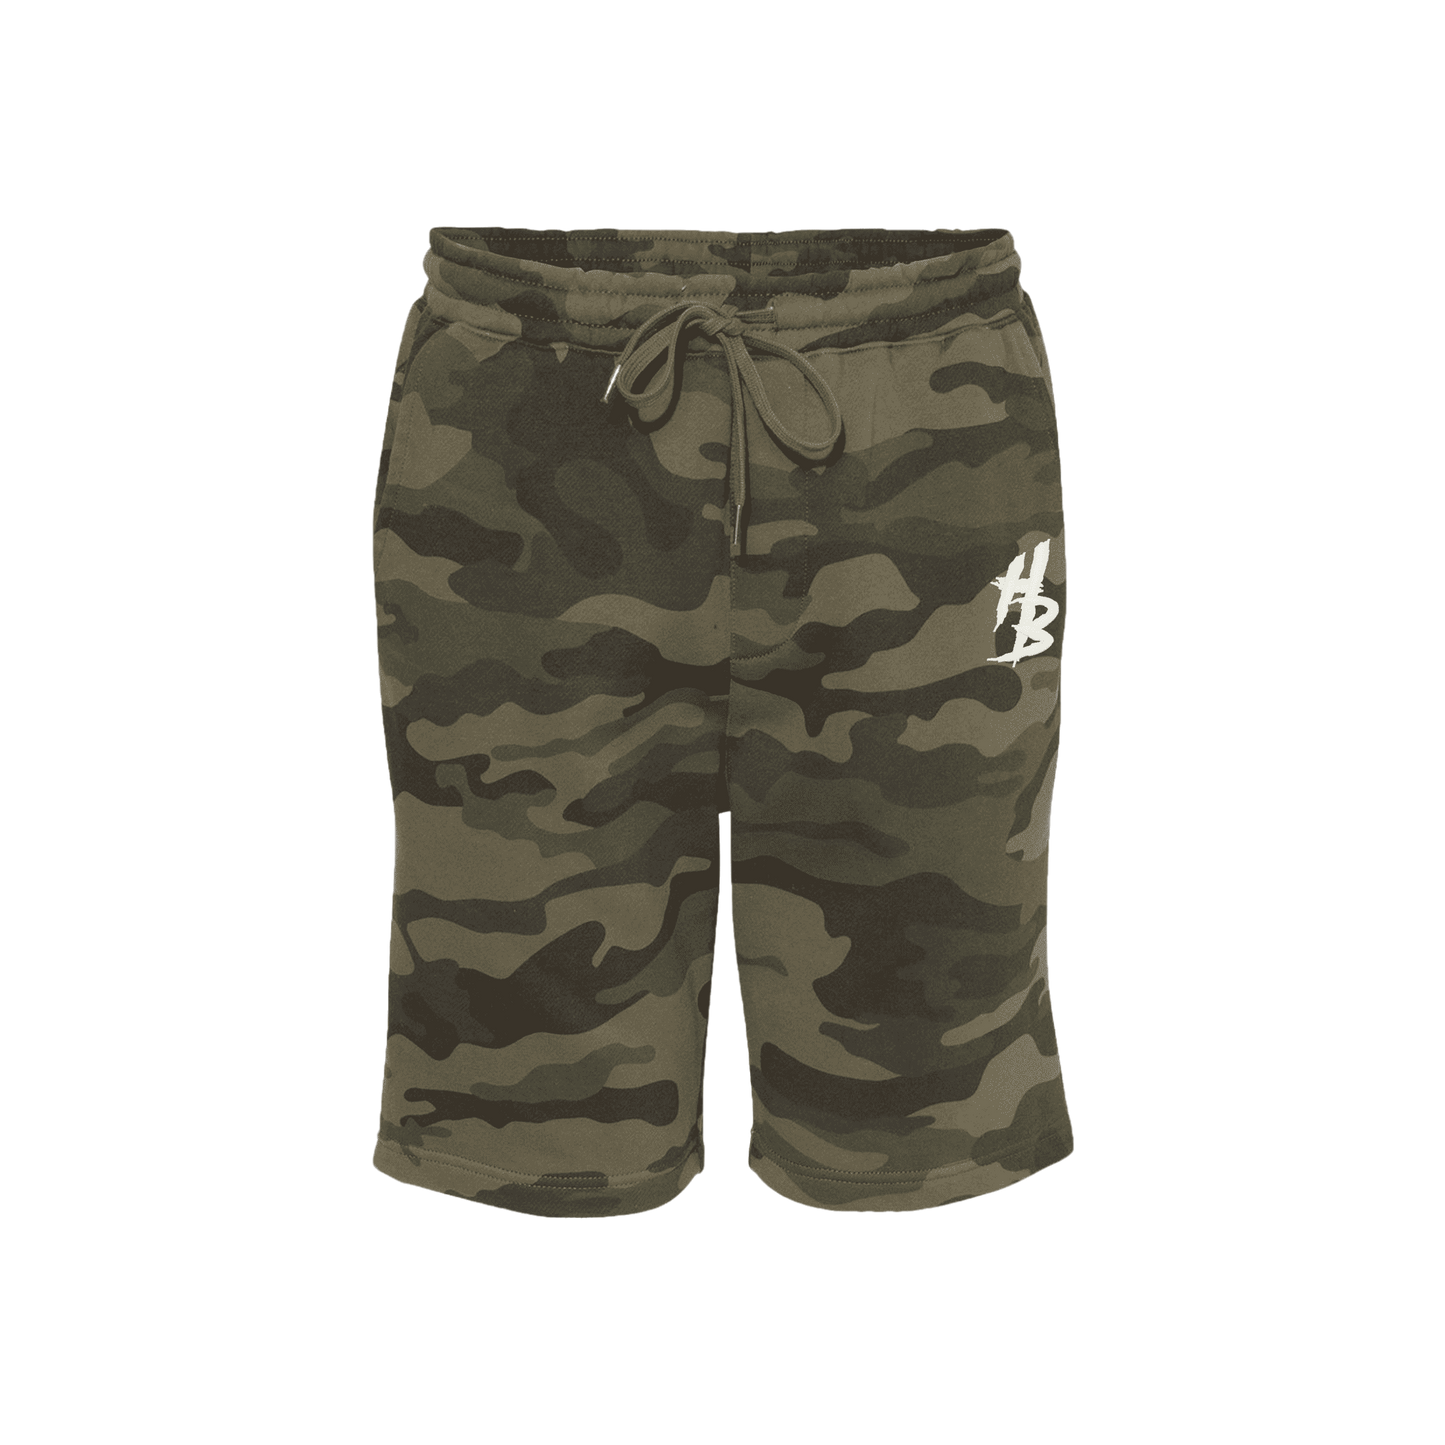 HB Forest Camo Shorts - hdlm.brgnd